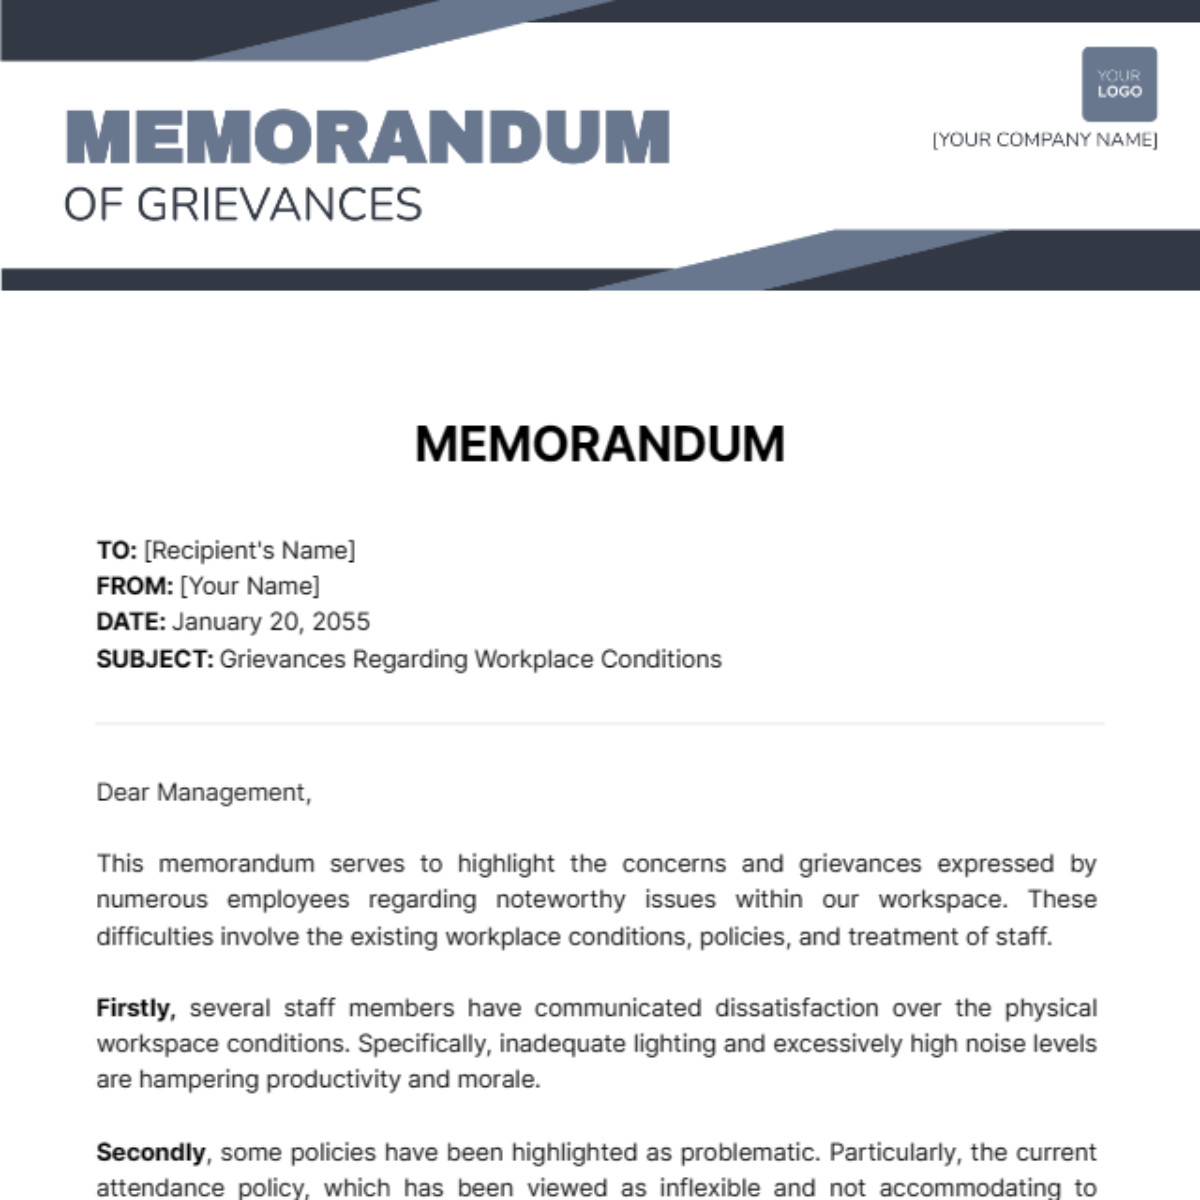 Memorandum of Grievances